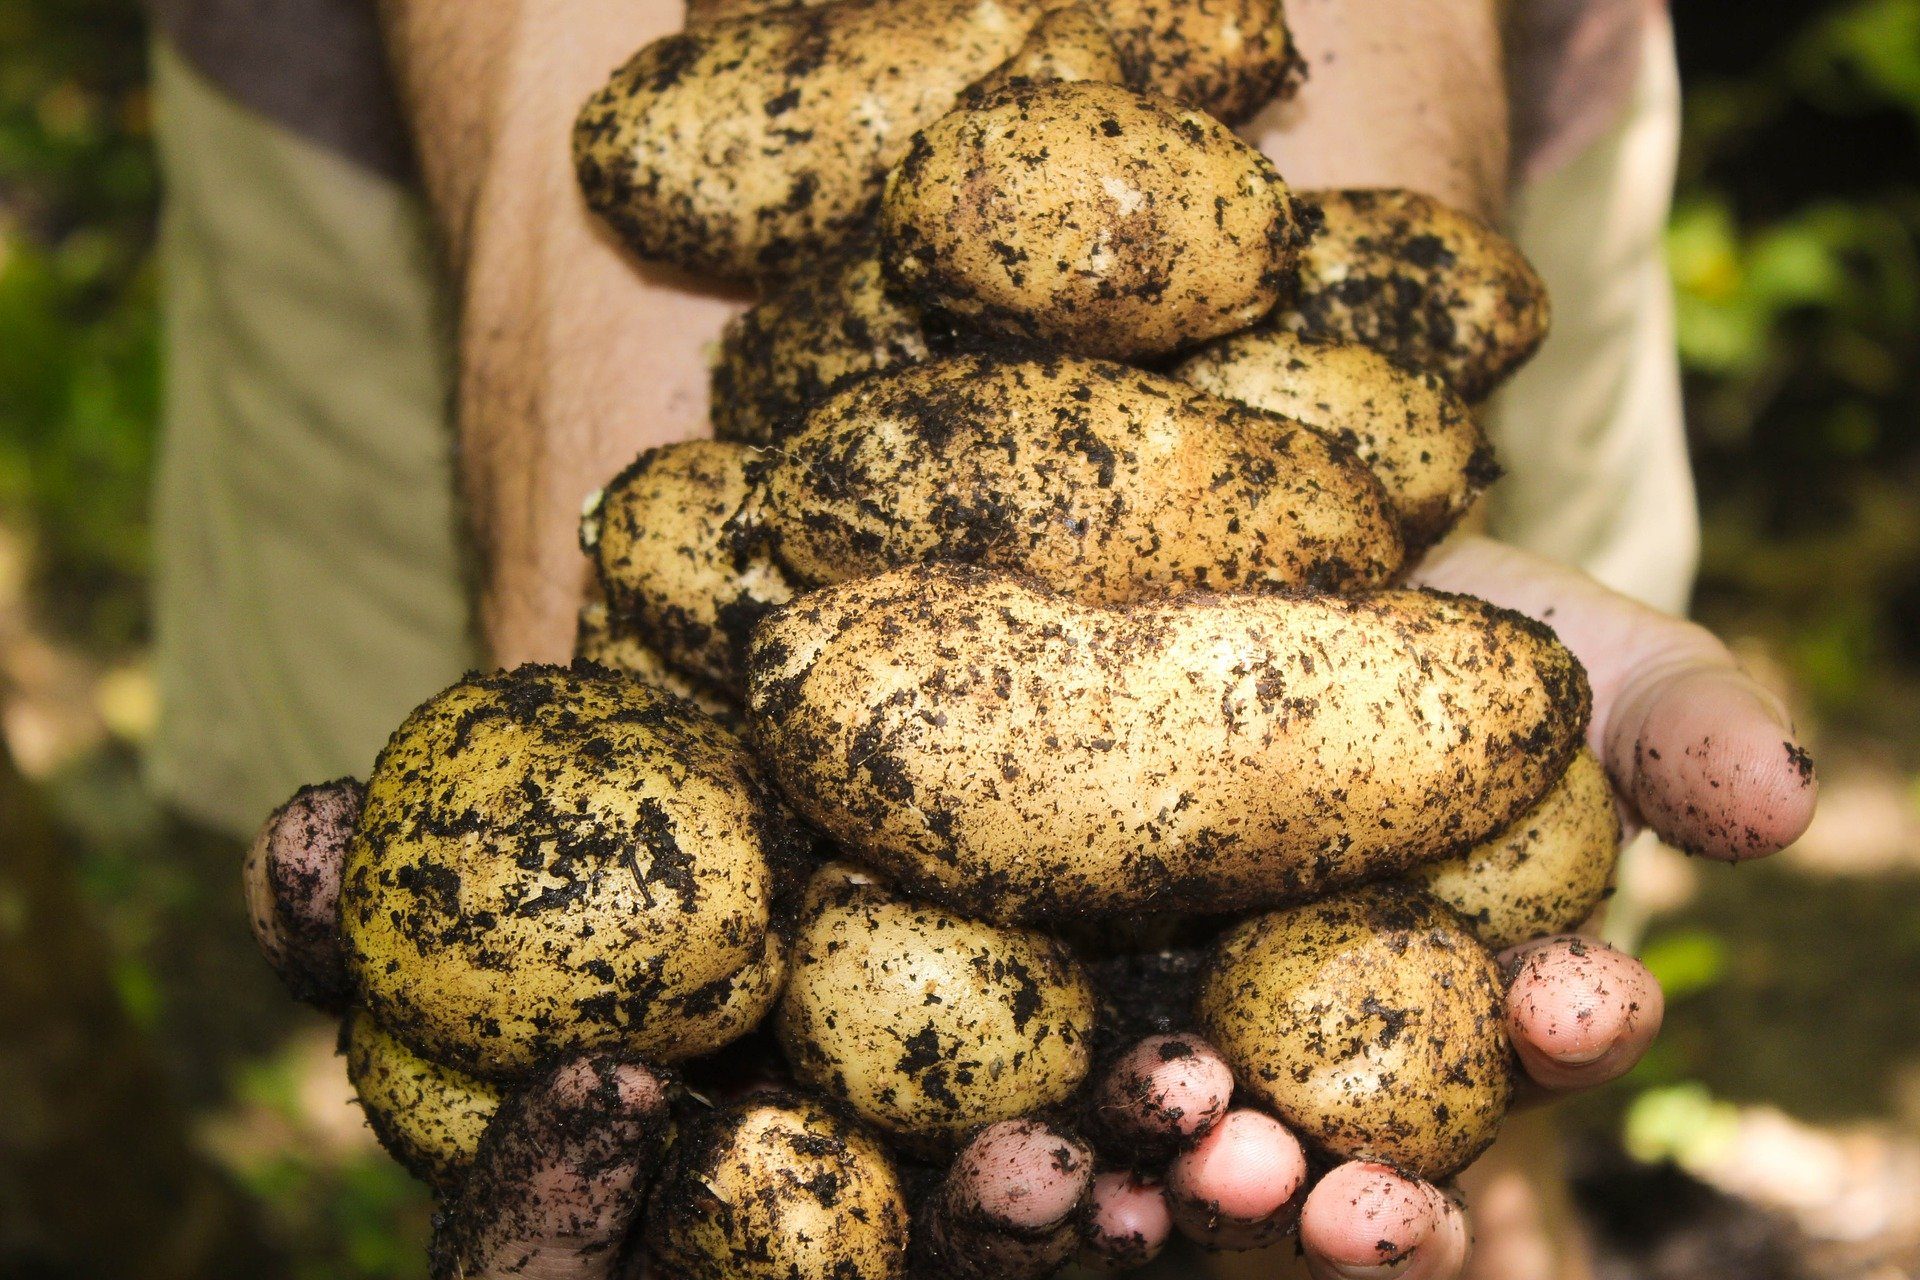 Potatoe farming in Scotland